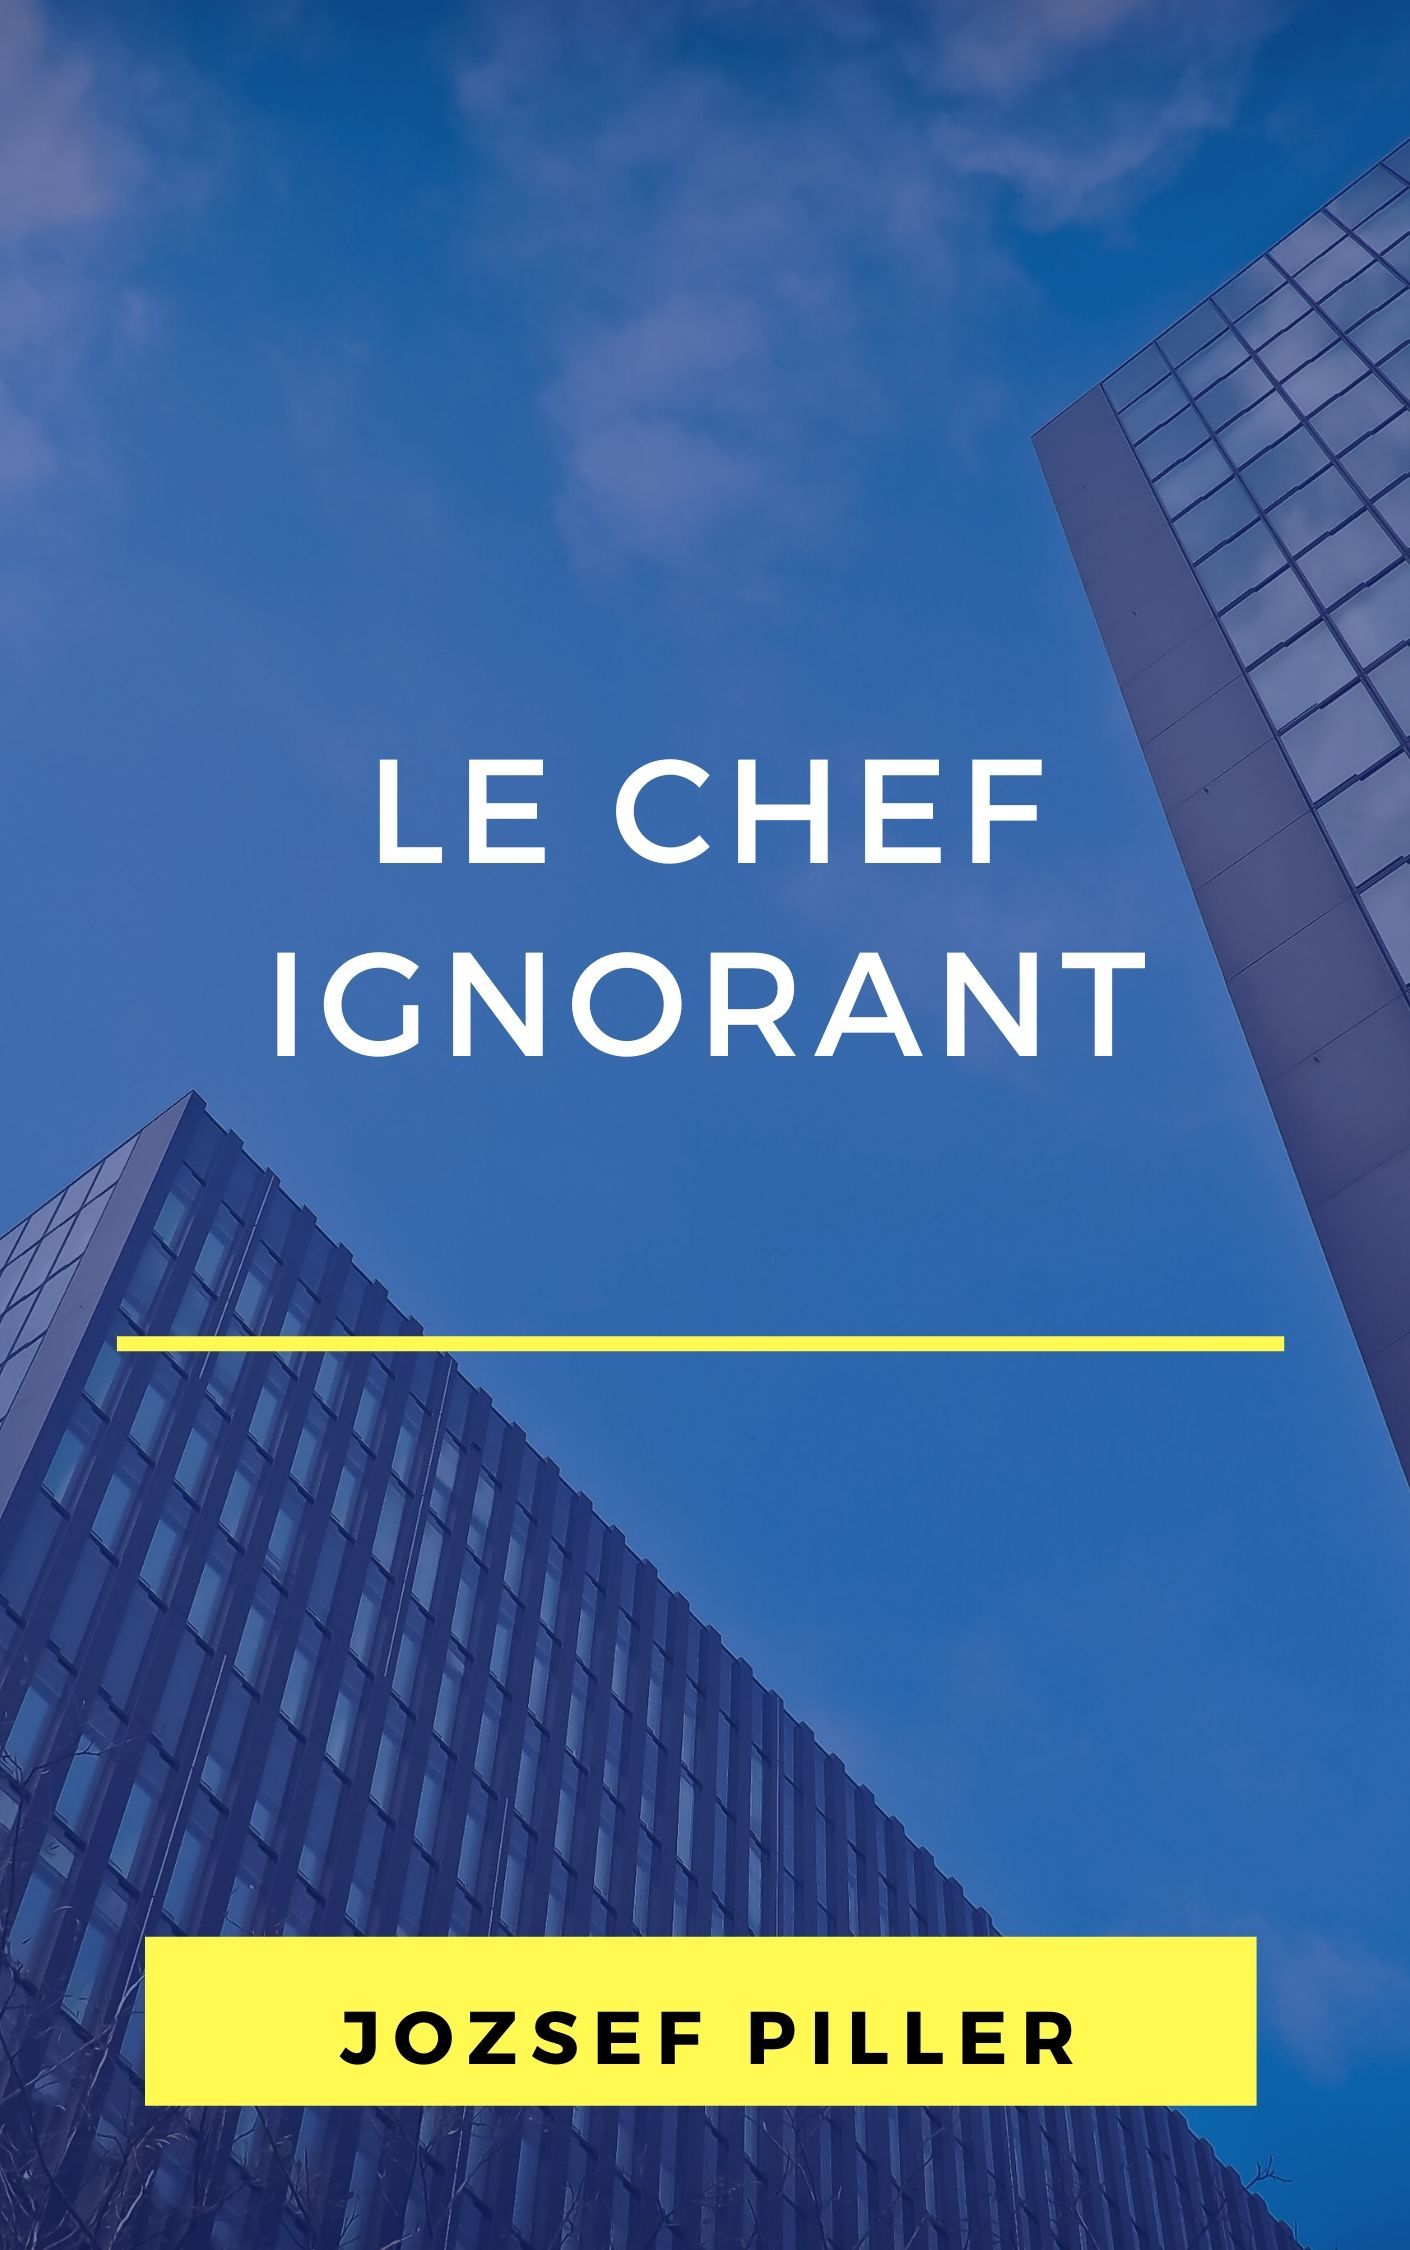 Le chef ignorant, eBook by Jozsef Piller